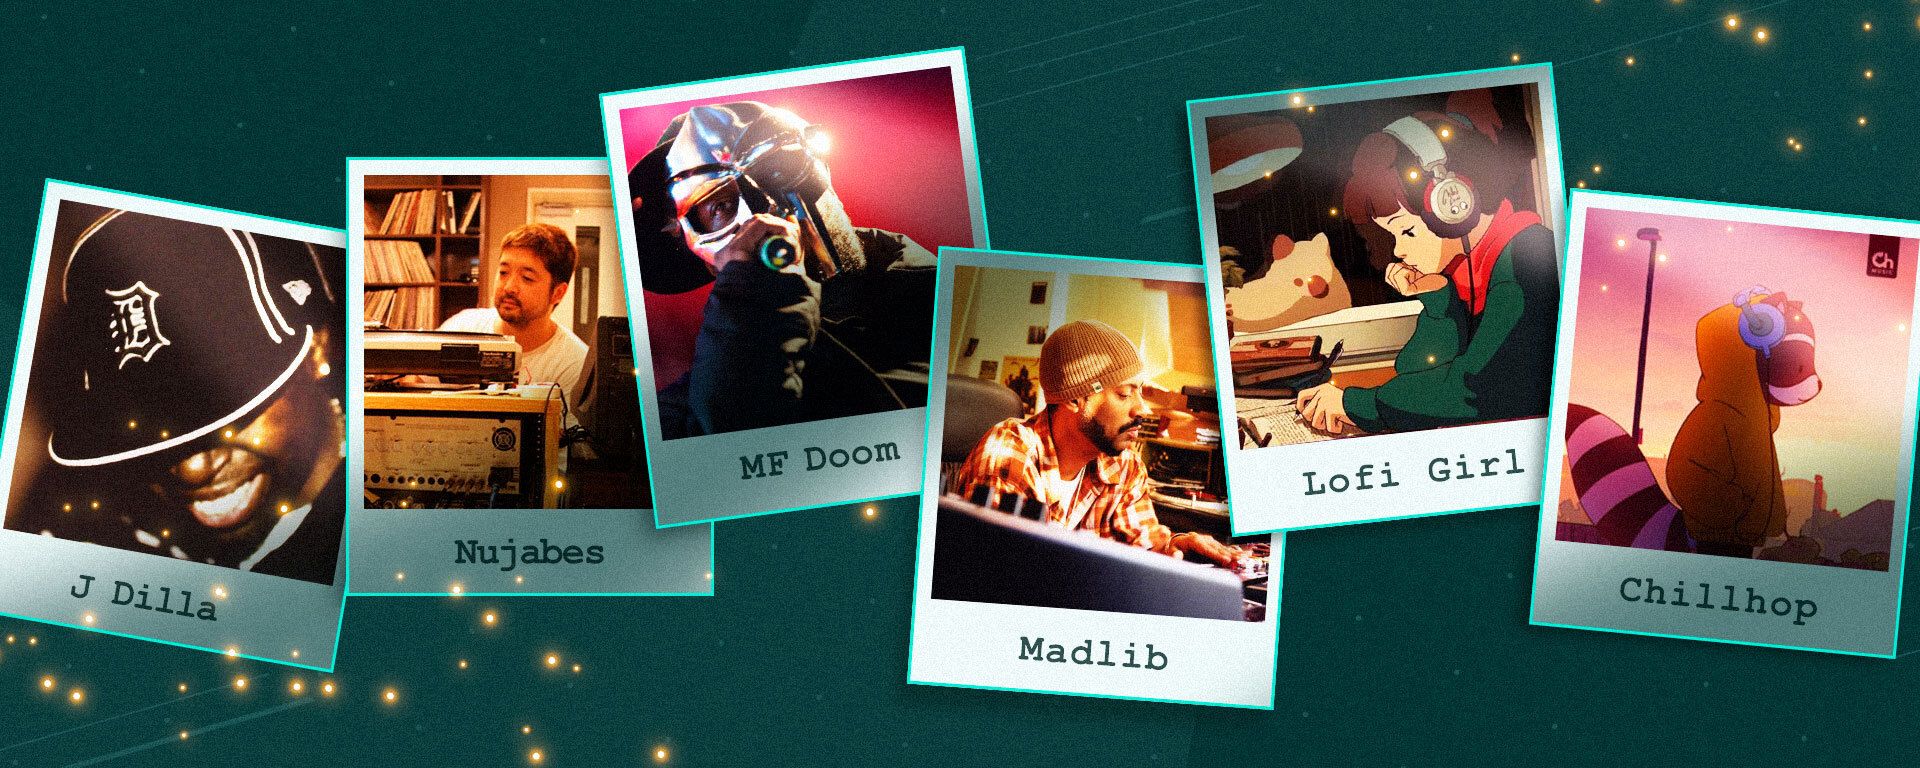 Examples of lofi music artists